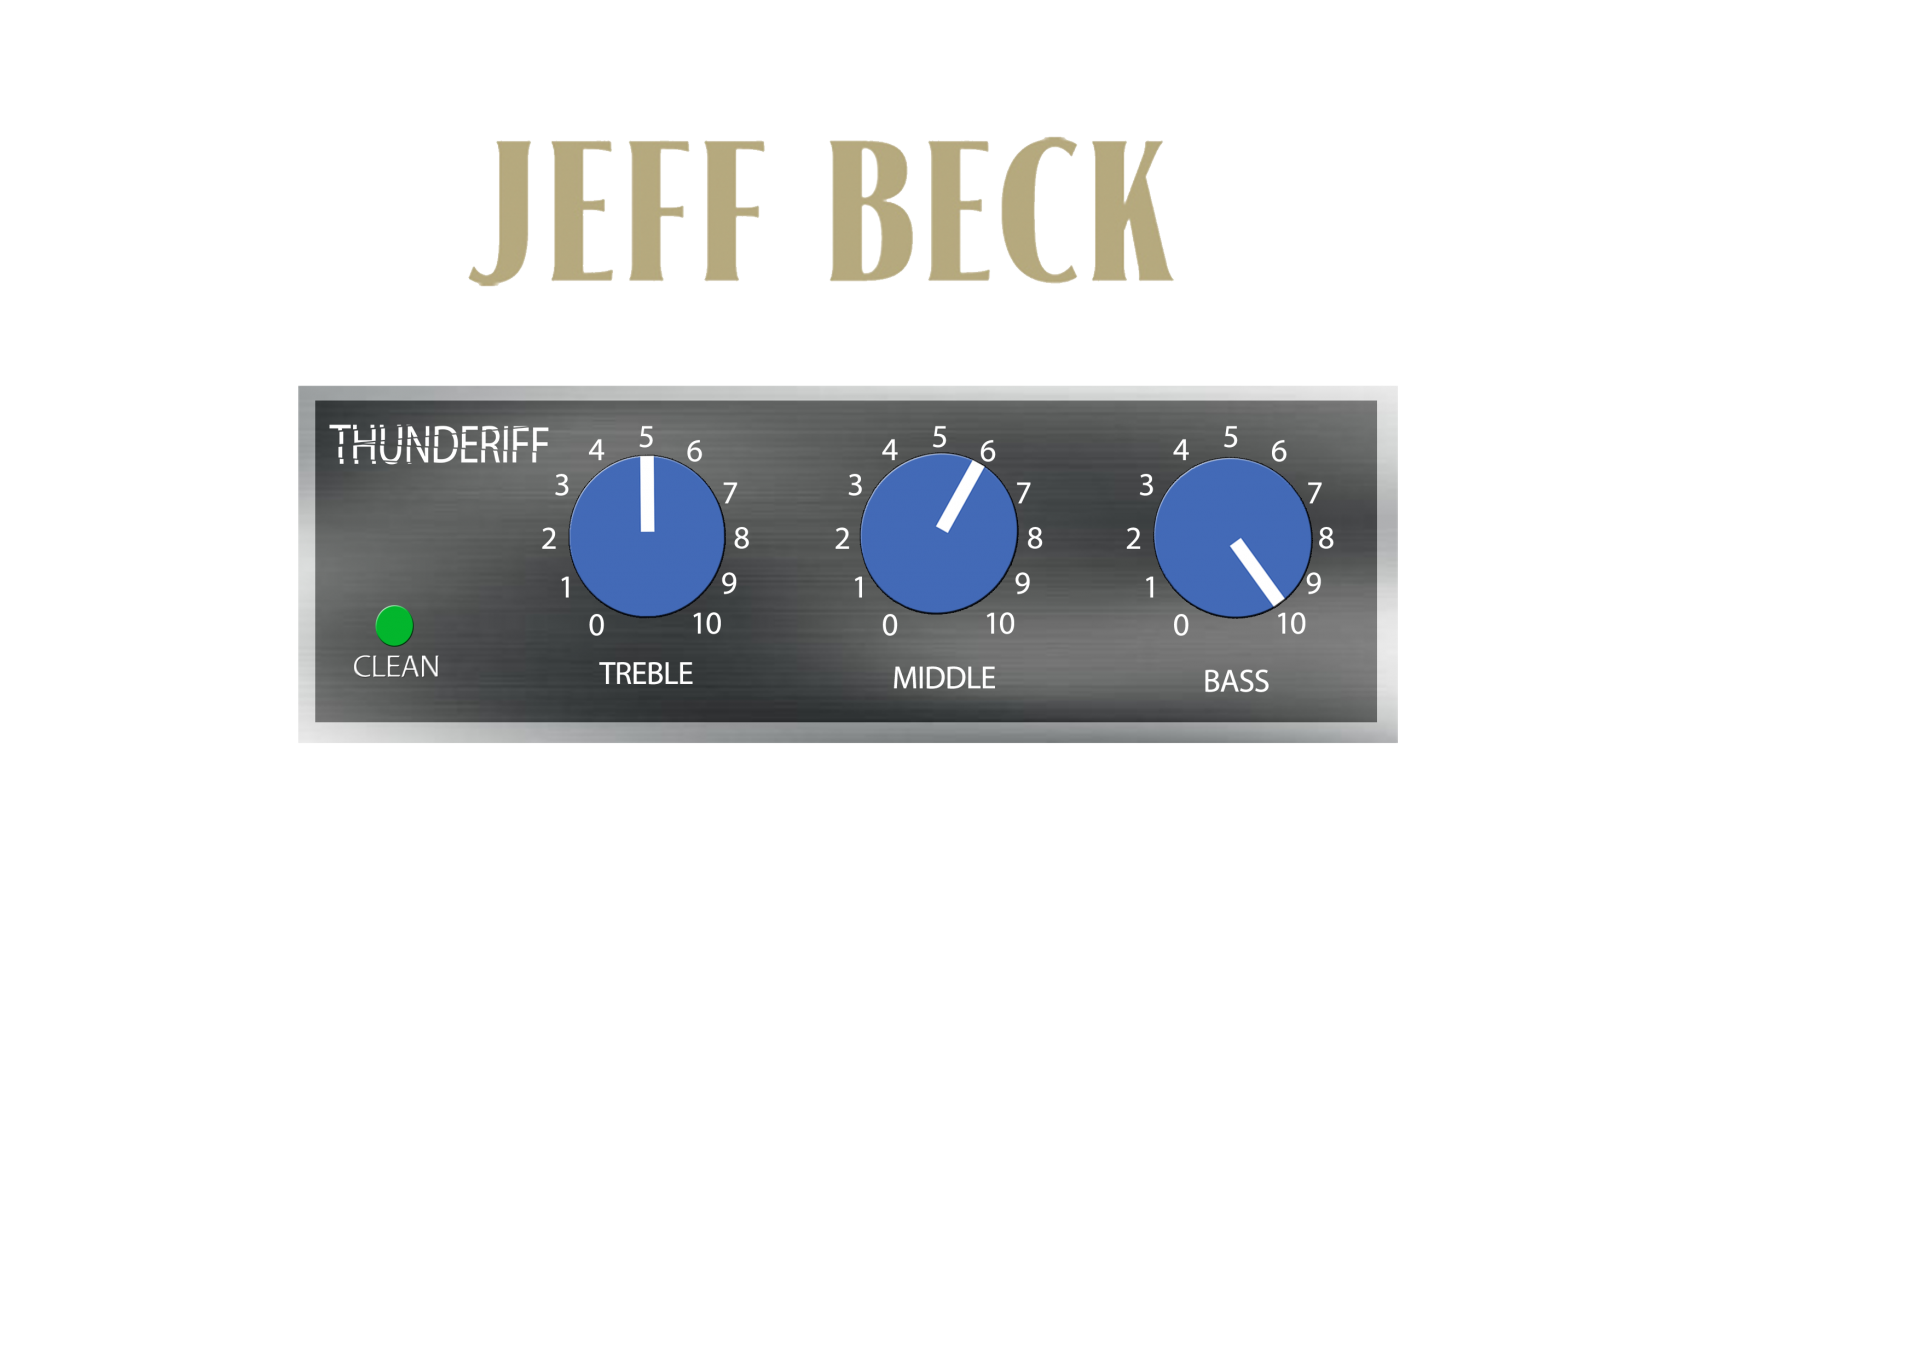 Jeff beck